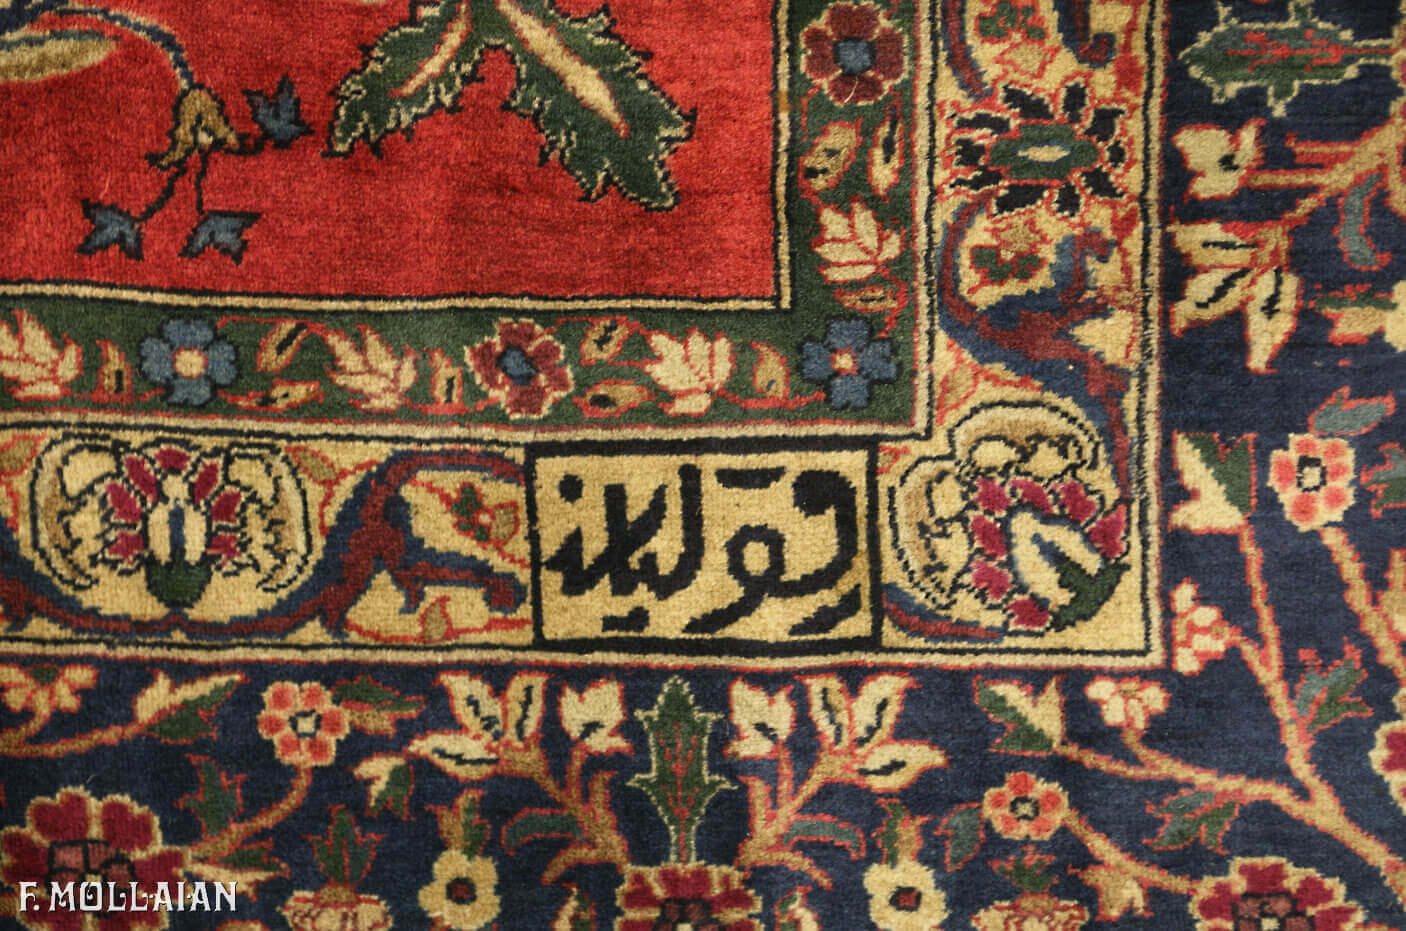 A Larg Antique Persian Kashan Manchester Carpet n°:12335250